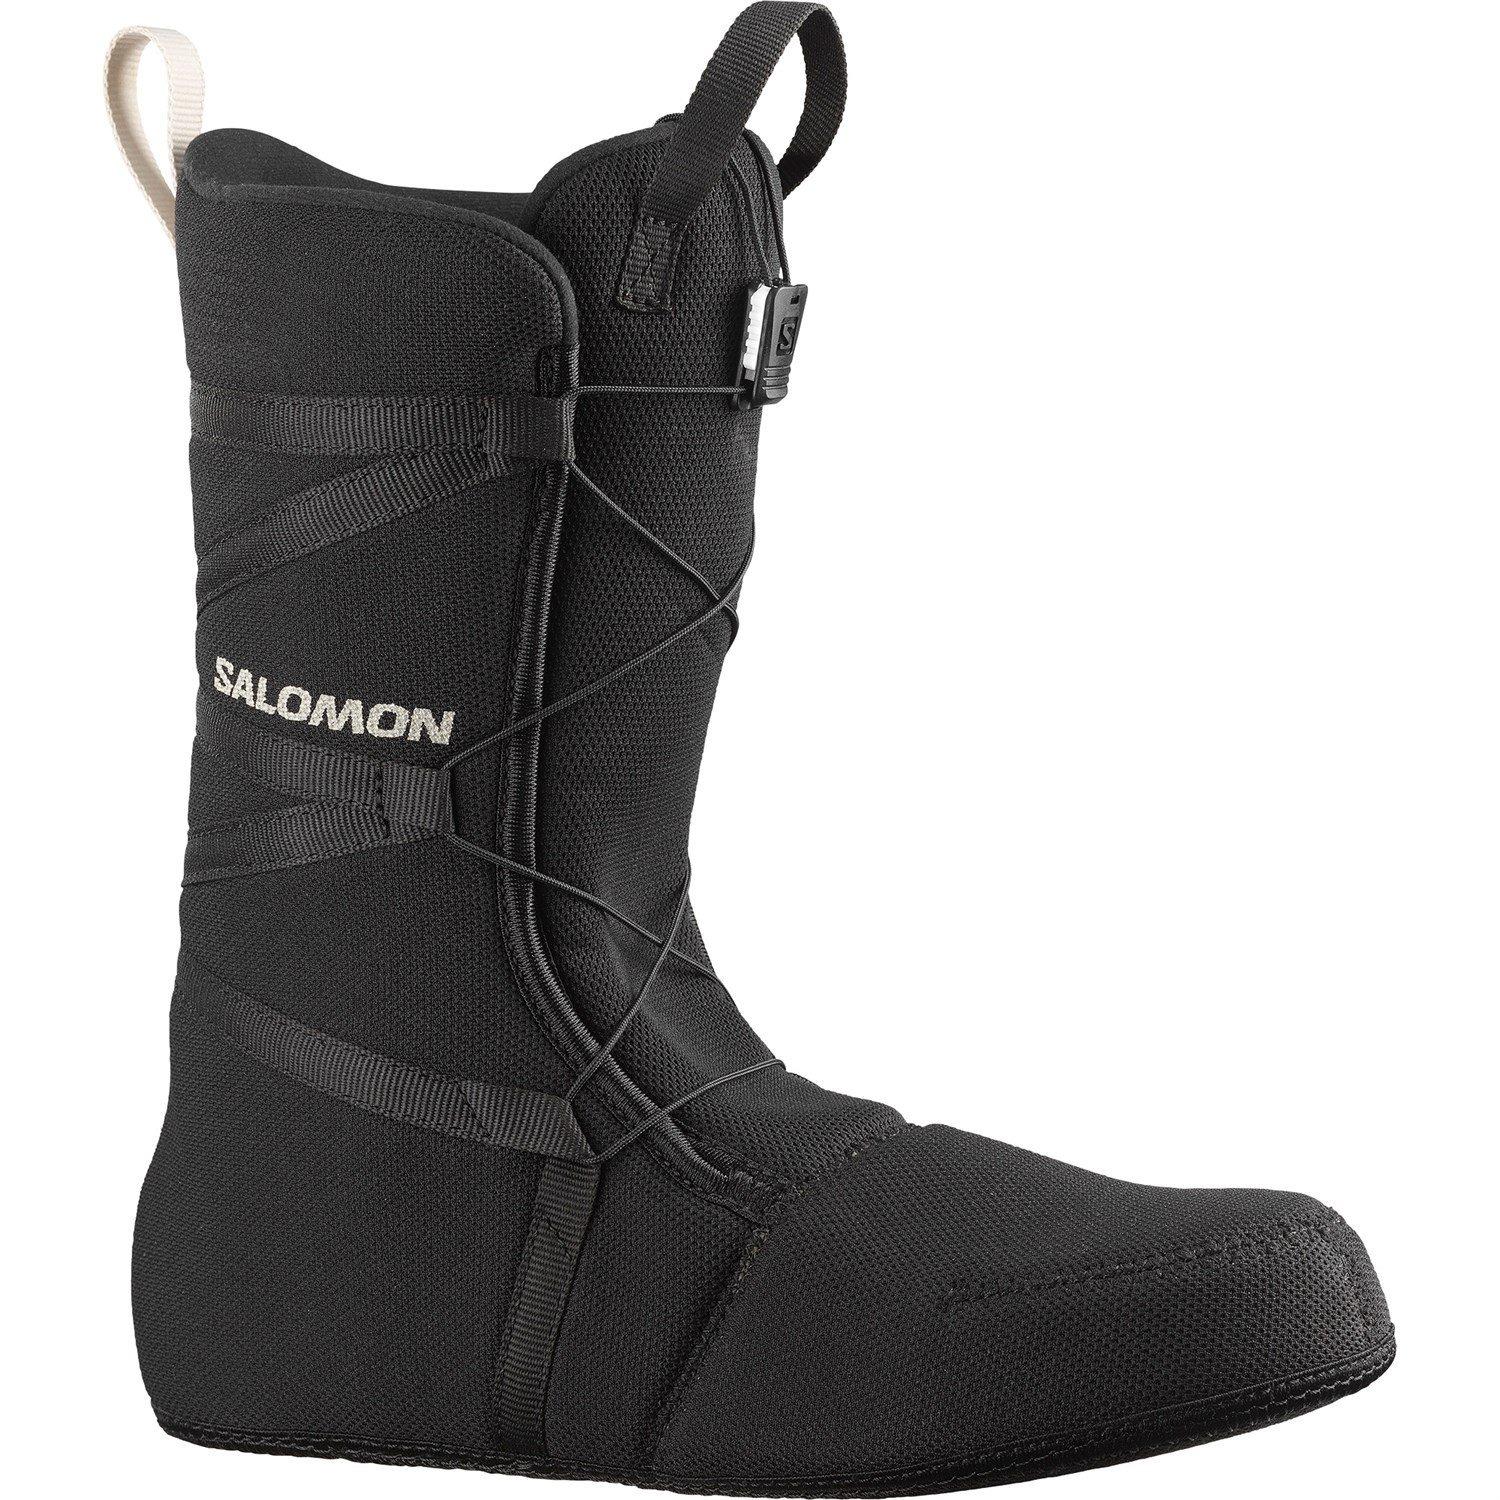 Salomon Faction BOA Snowboard Boot